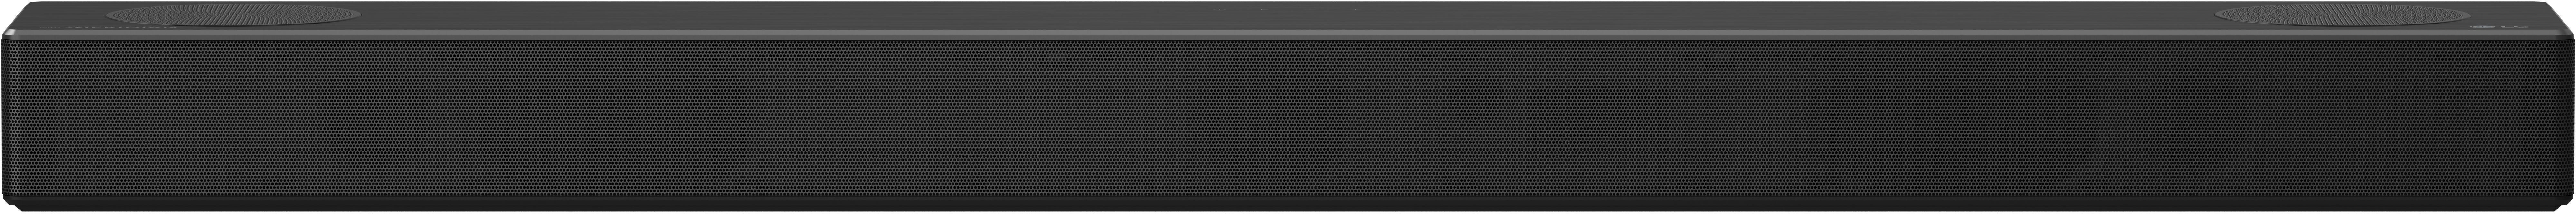 Black Soundbar, LG DSN7CY,